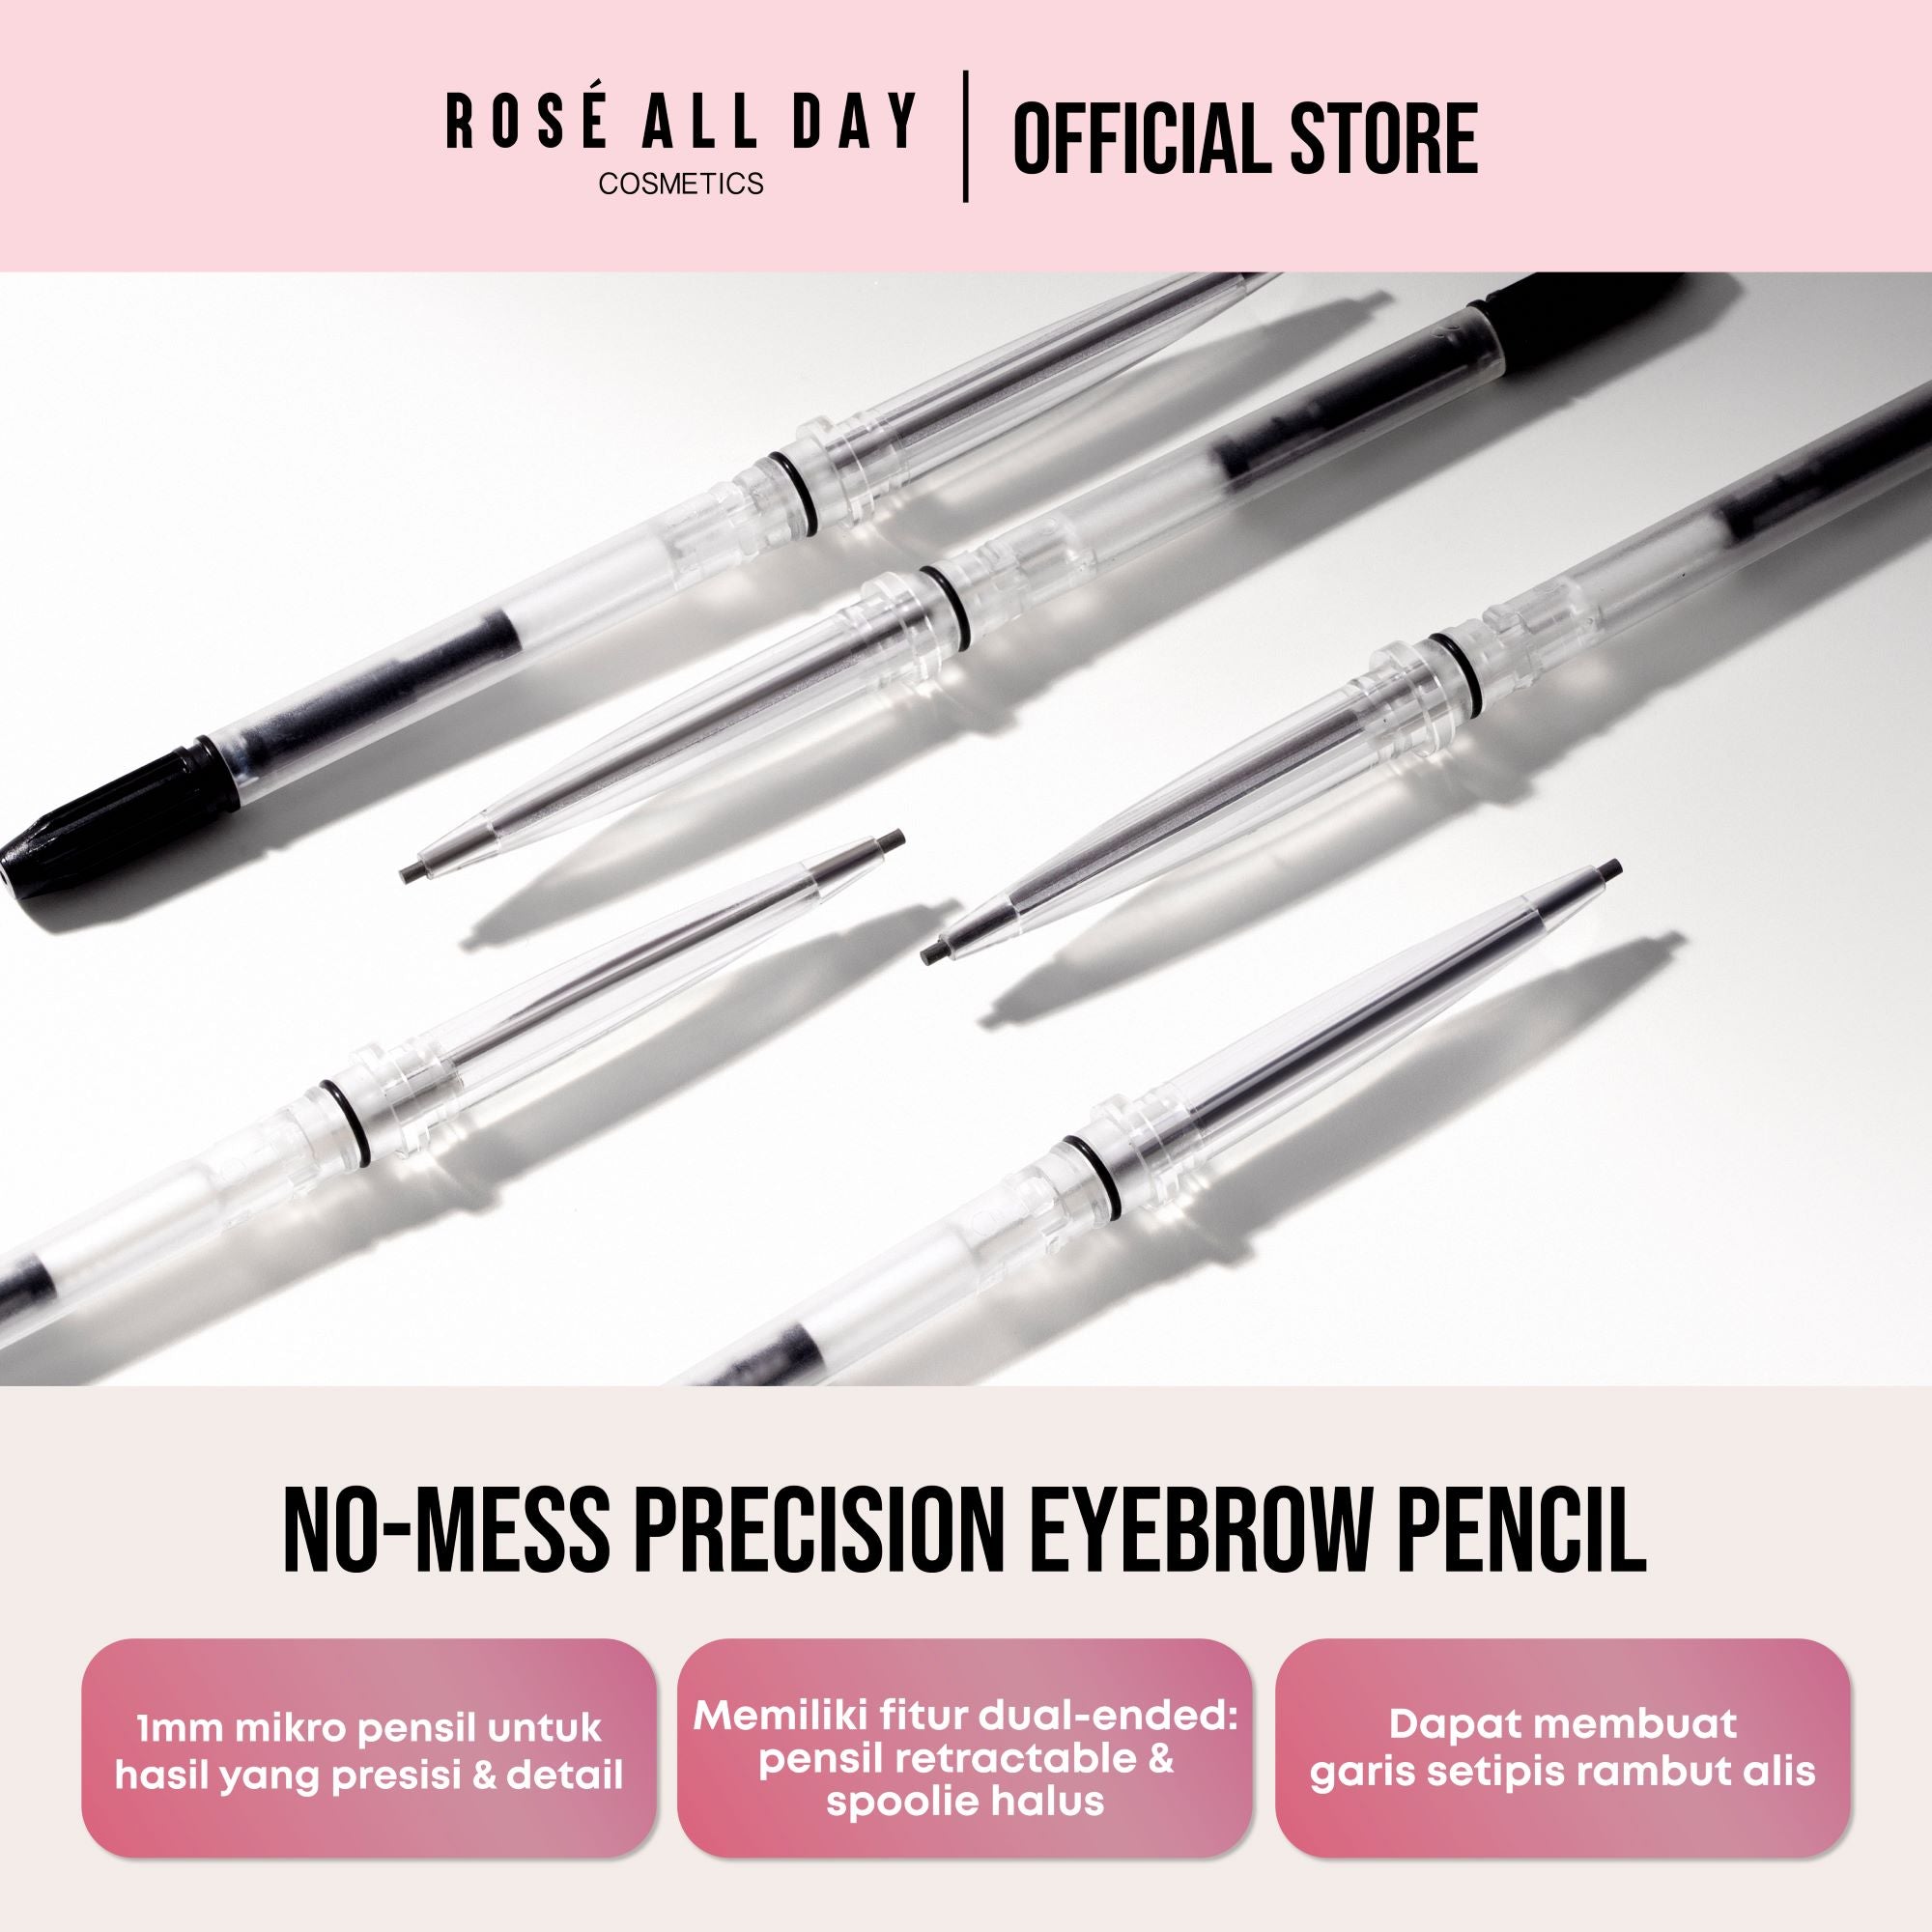 [NEW] Rosé All Day Brow Fix Micro Pencil Refill